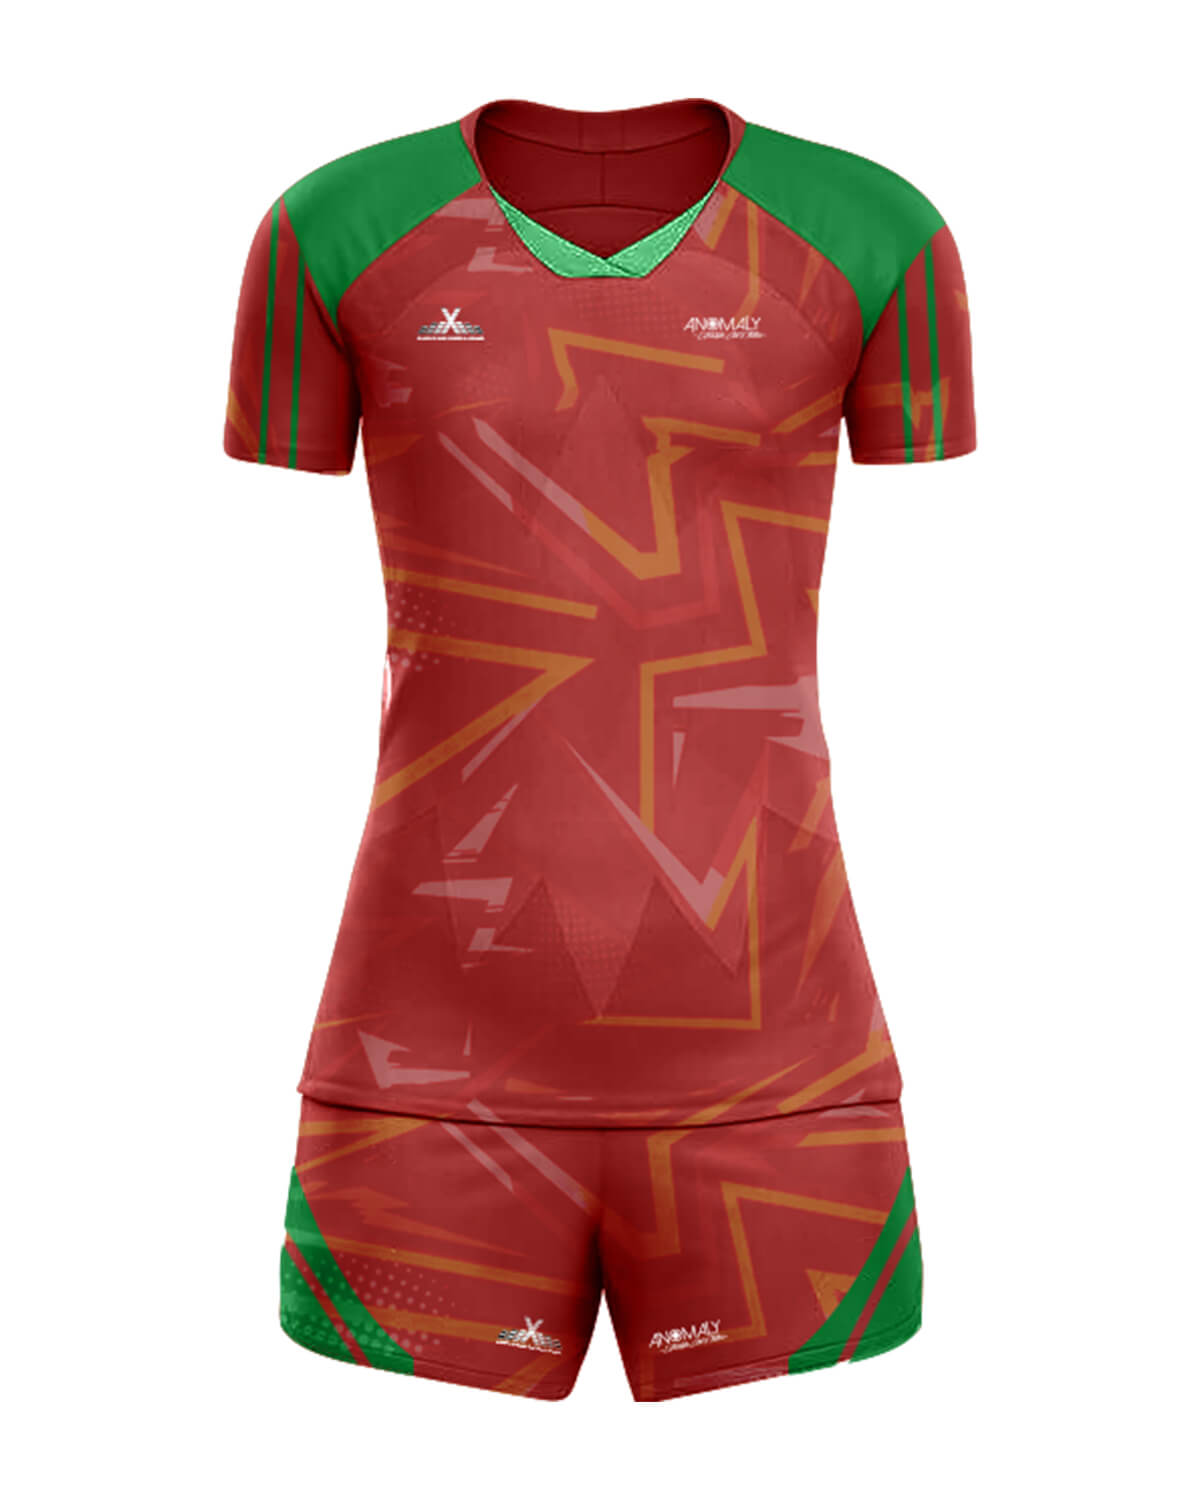 AthleisureX Full Custom Football Uniform - For Men